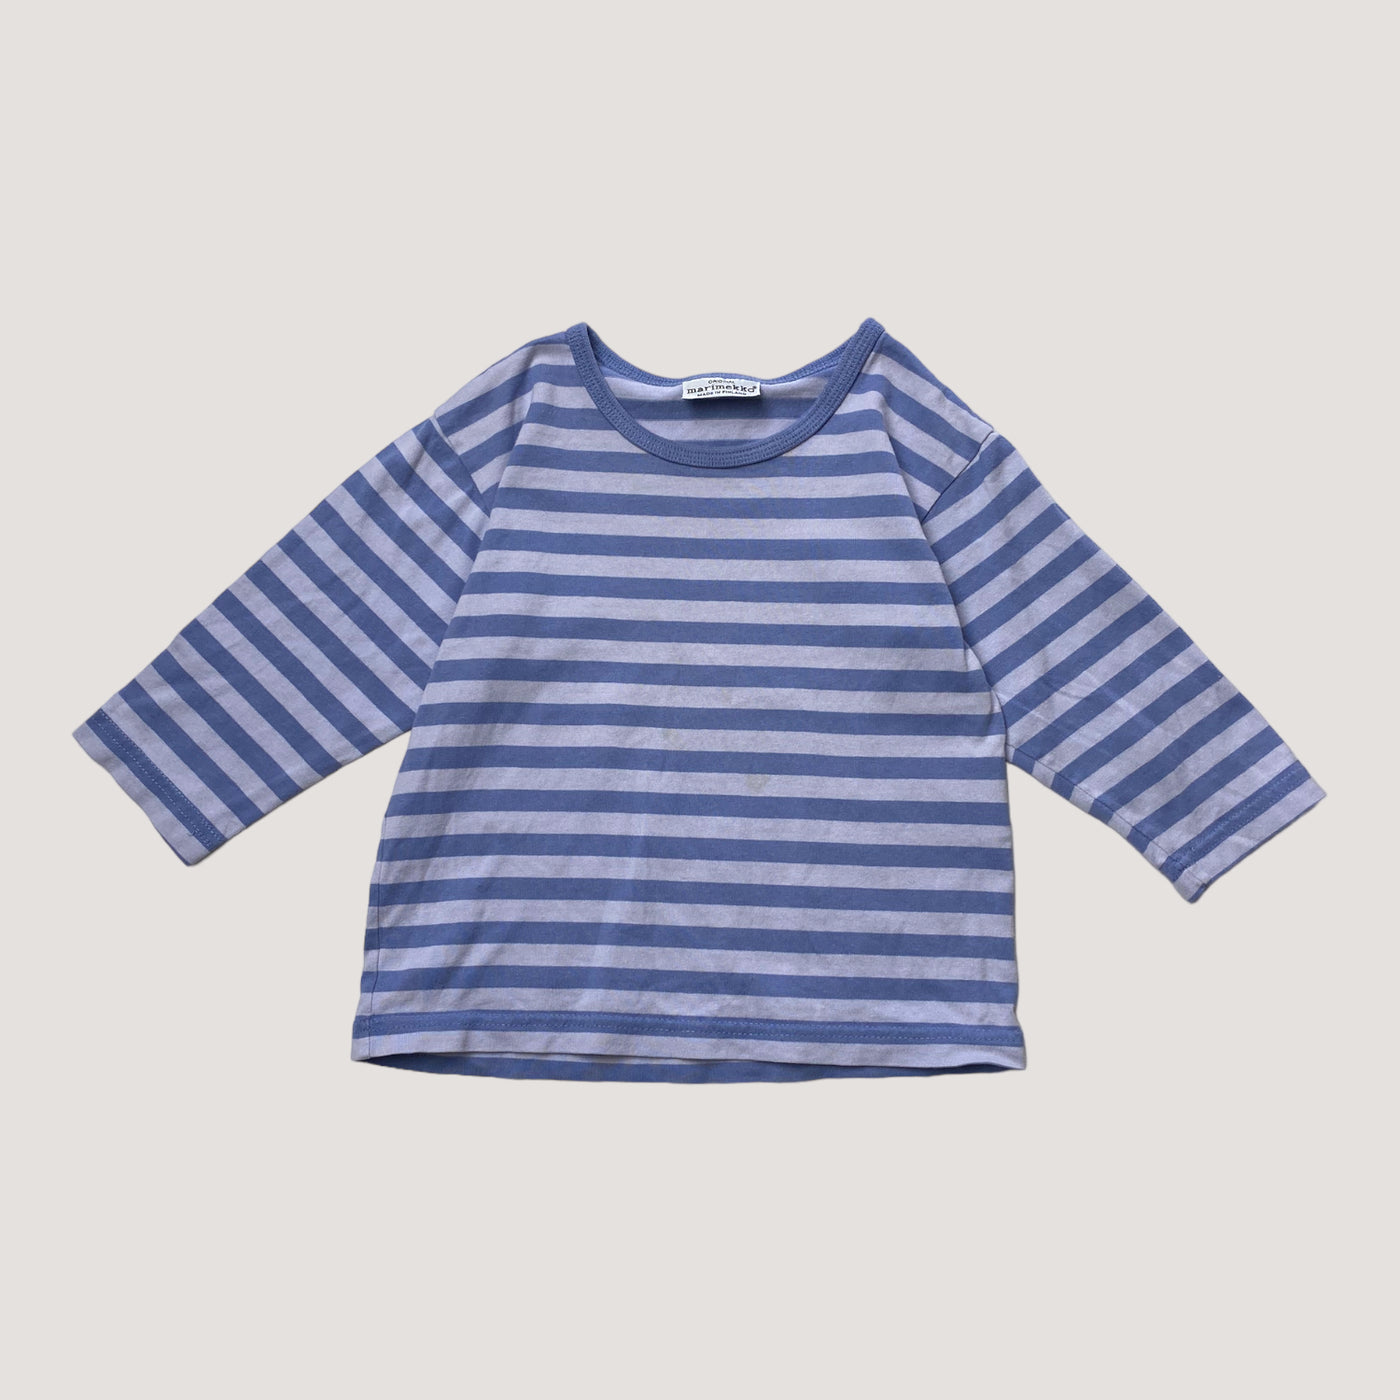 Marimekko stripe long sleeve shirt, royal blue | 90cm